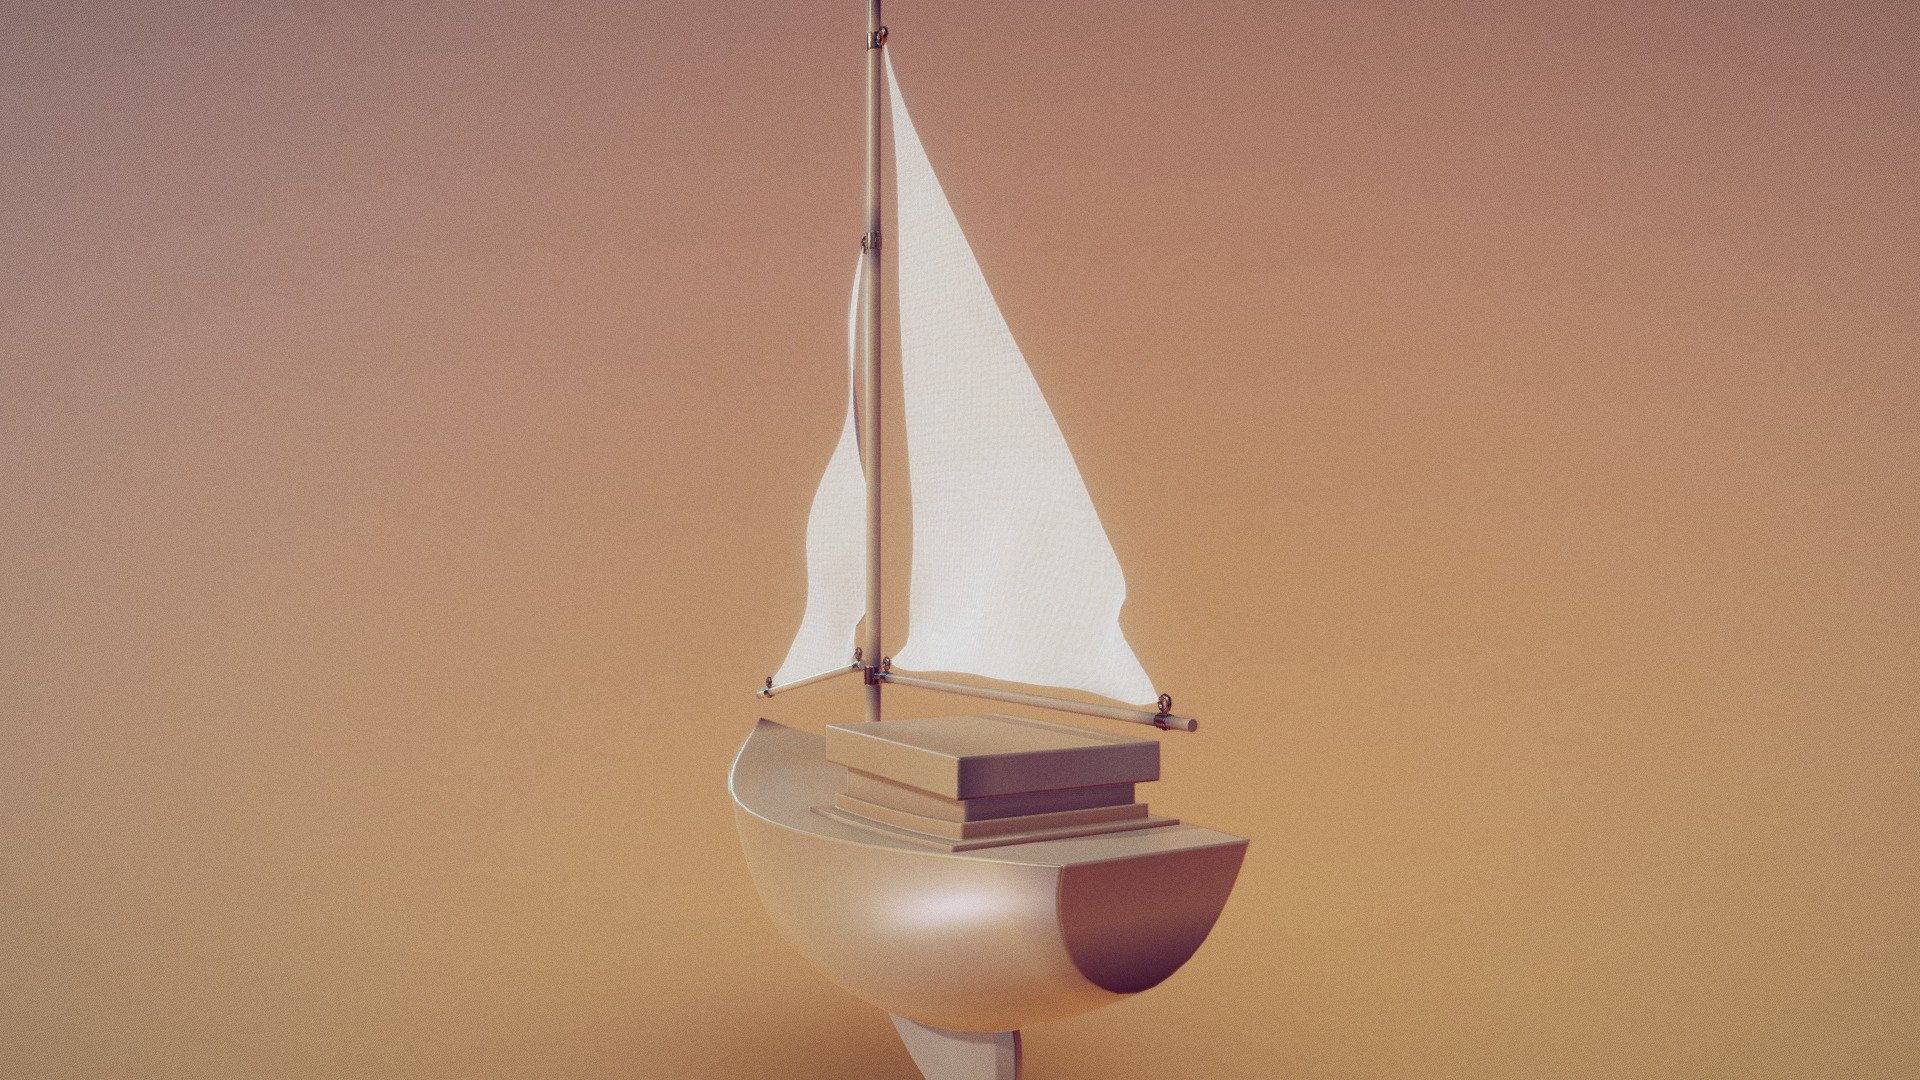 A Toy boat WIP - Toy Boat - 3D model by 3DTrip 3d model